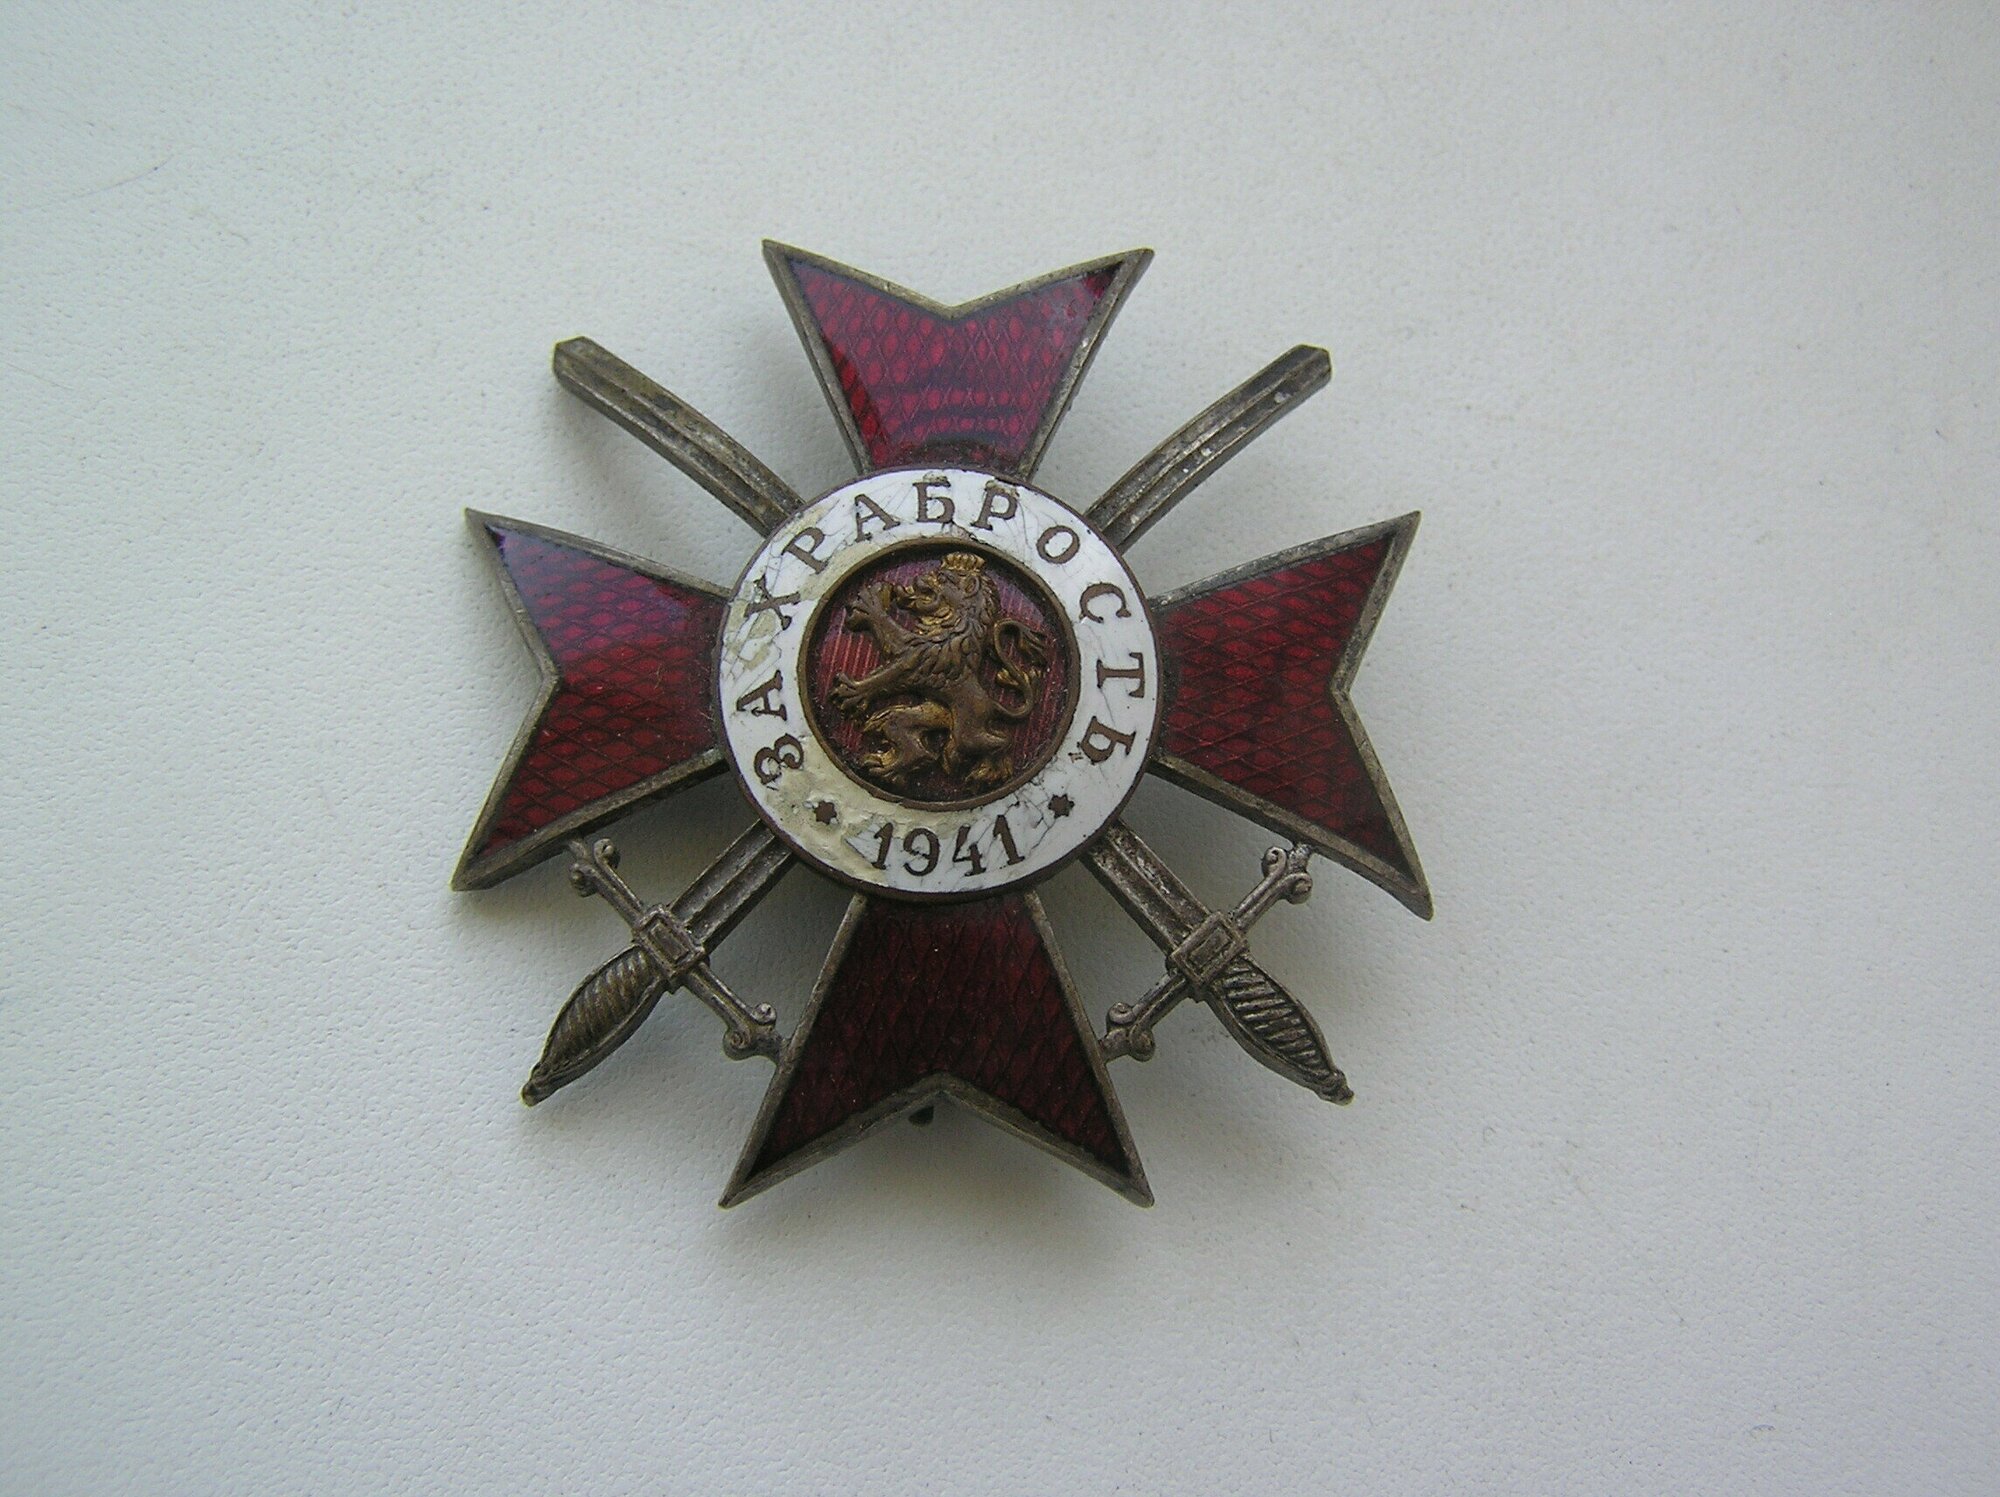 Болгария. Орден за храбрость. 4 степени 1 класса. Эмиссия 1941 года.